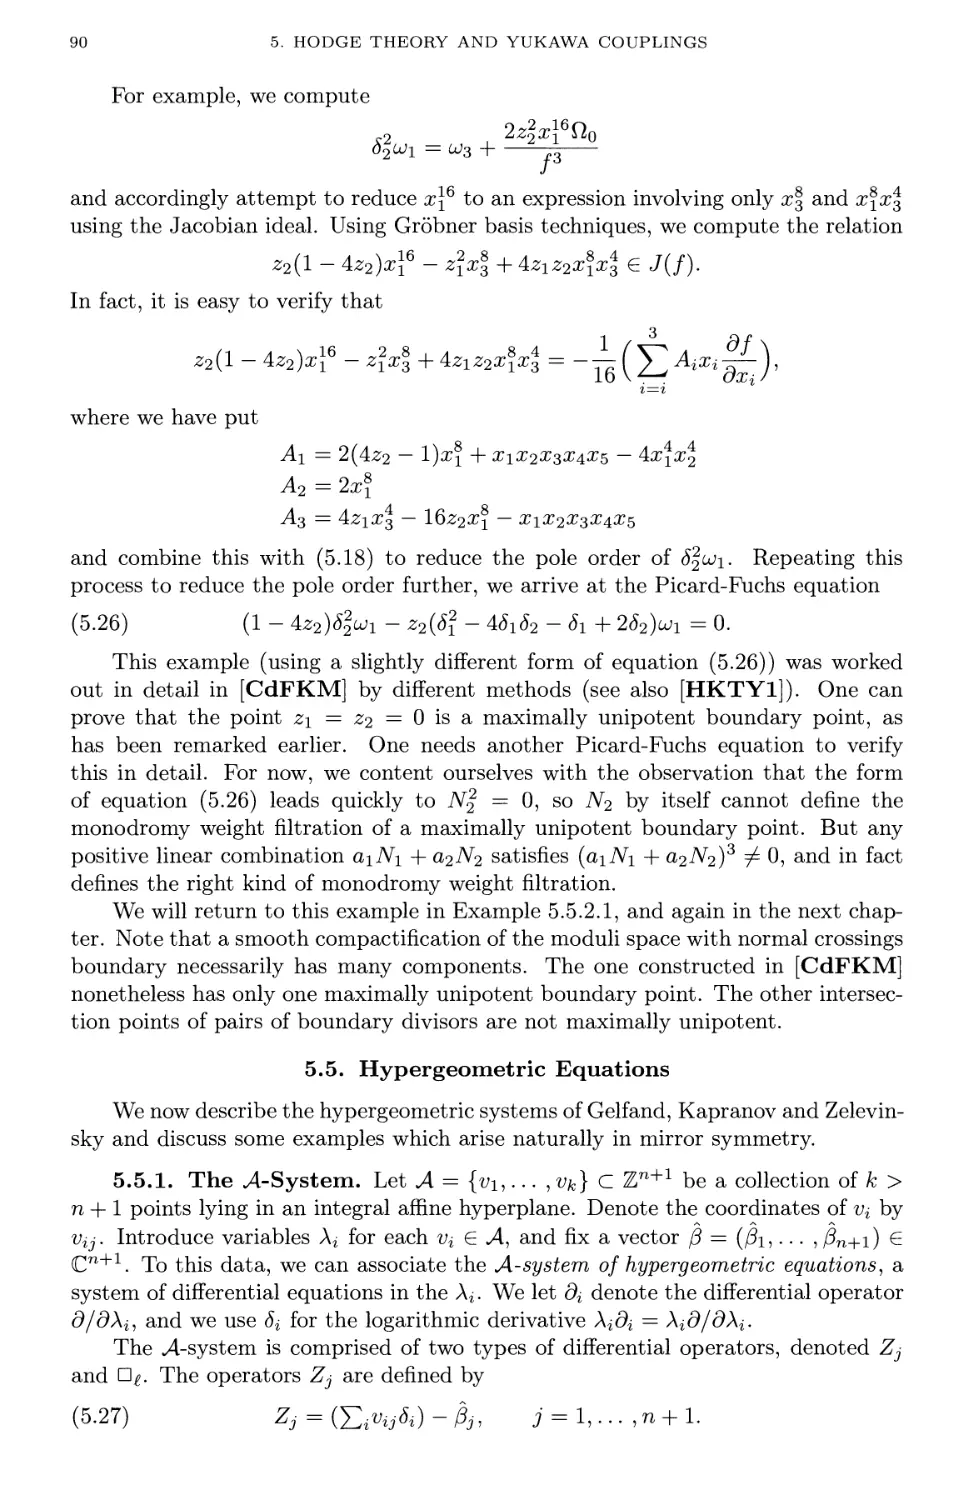 5.5. Hypergeometric Equations